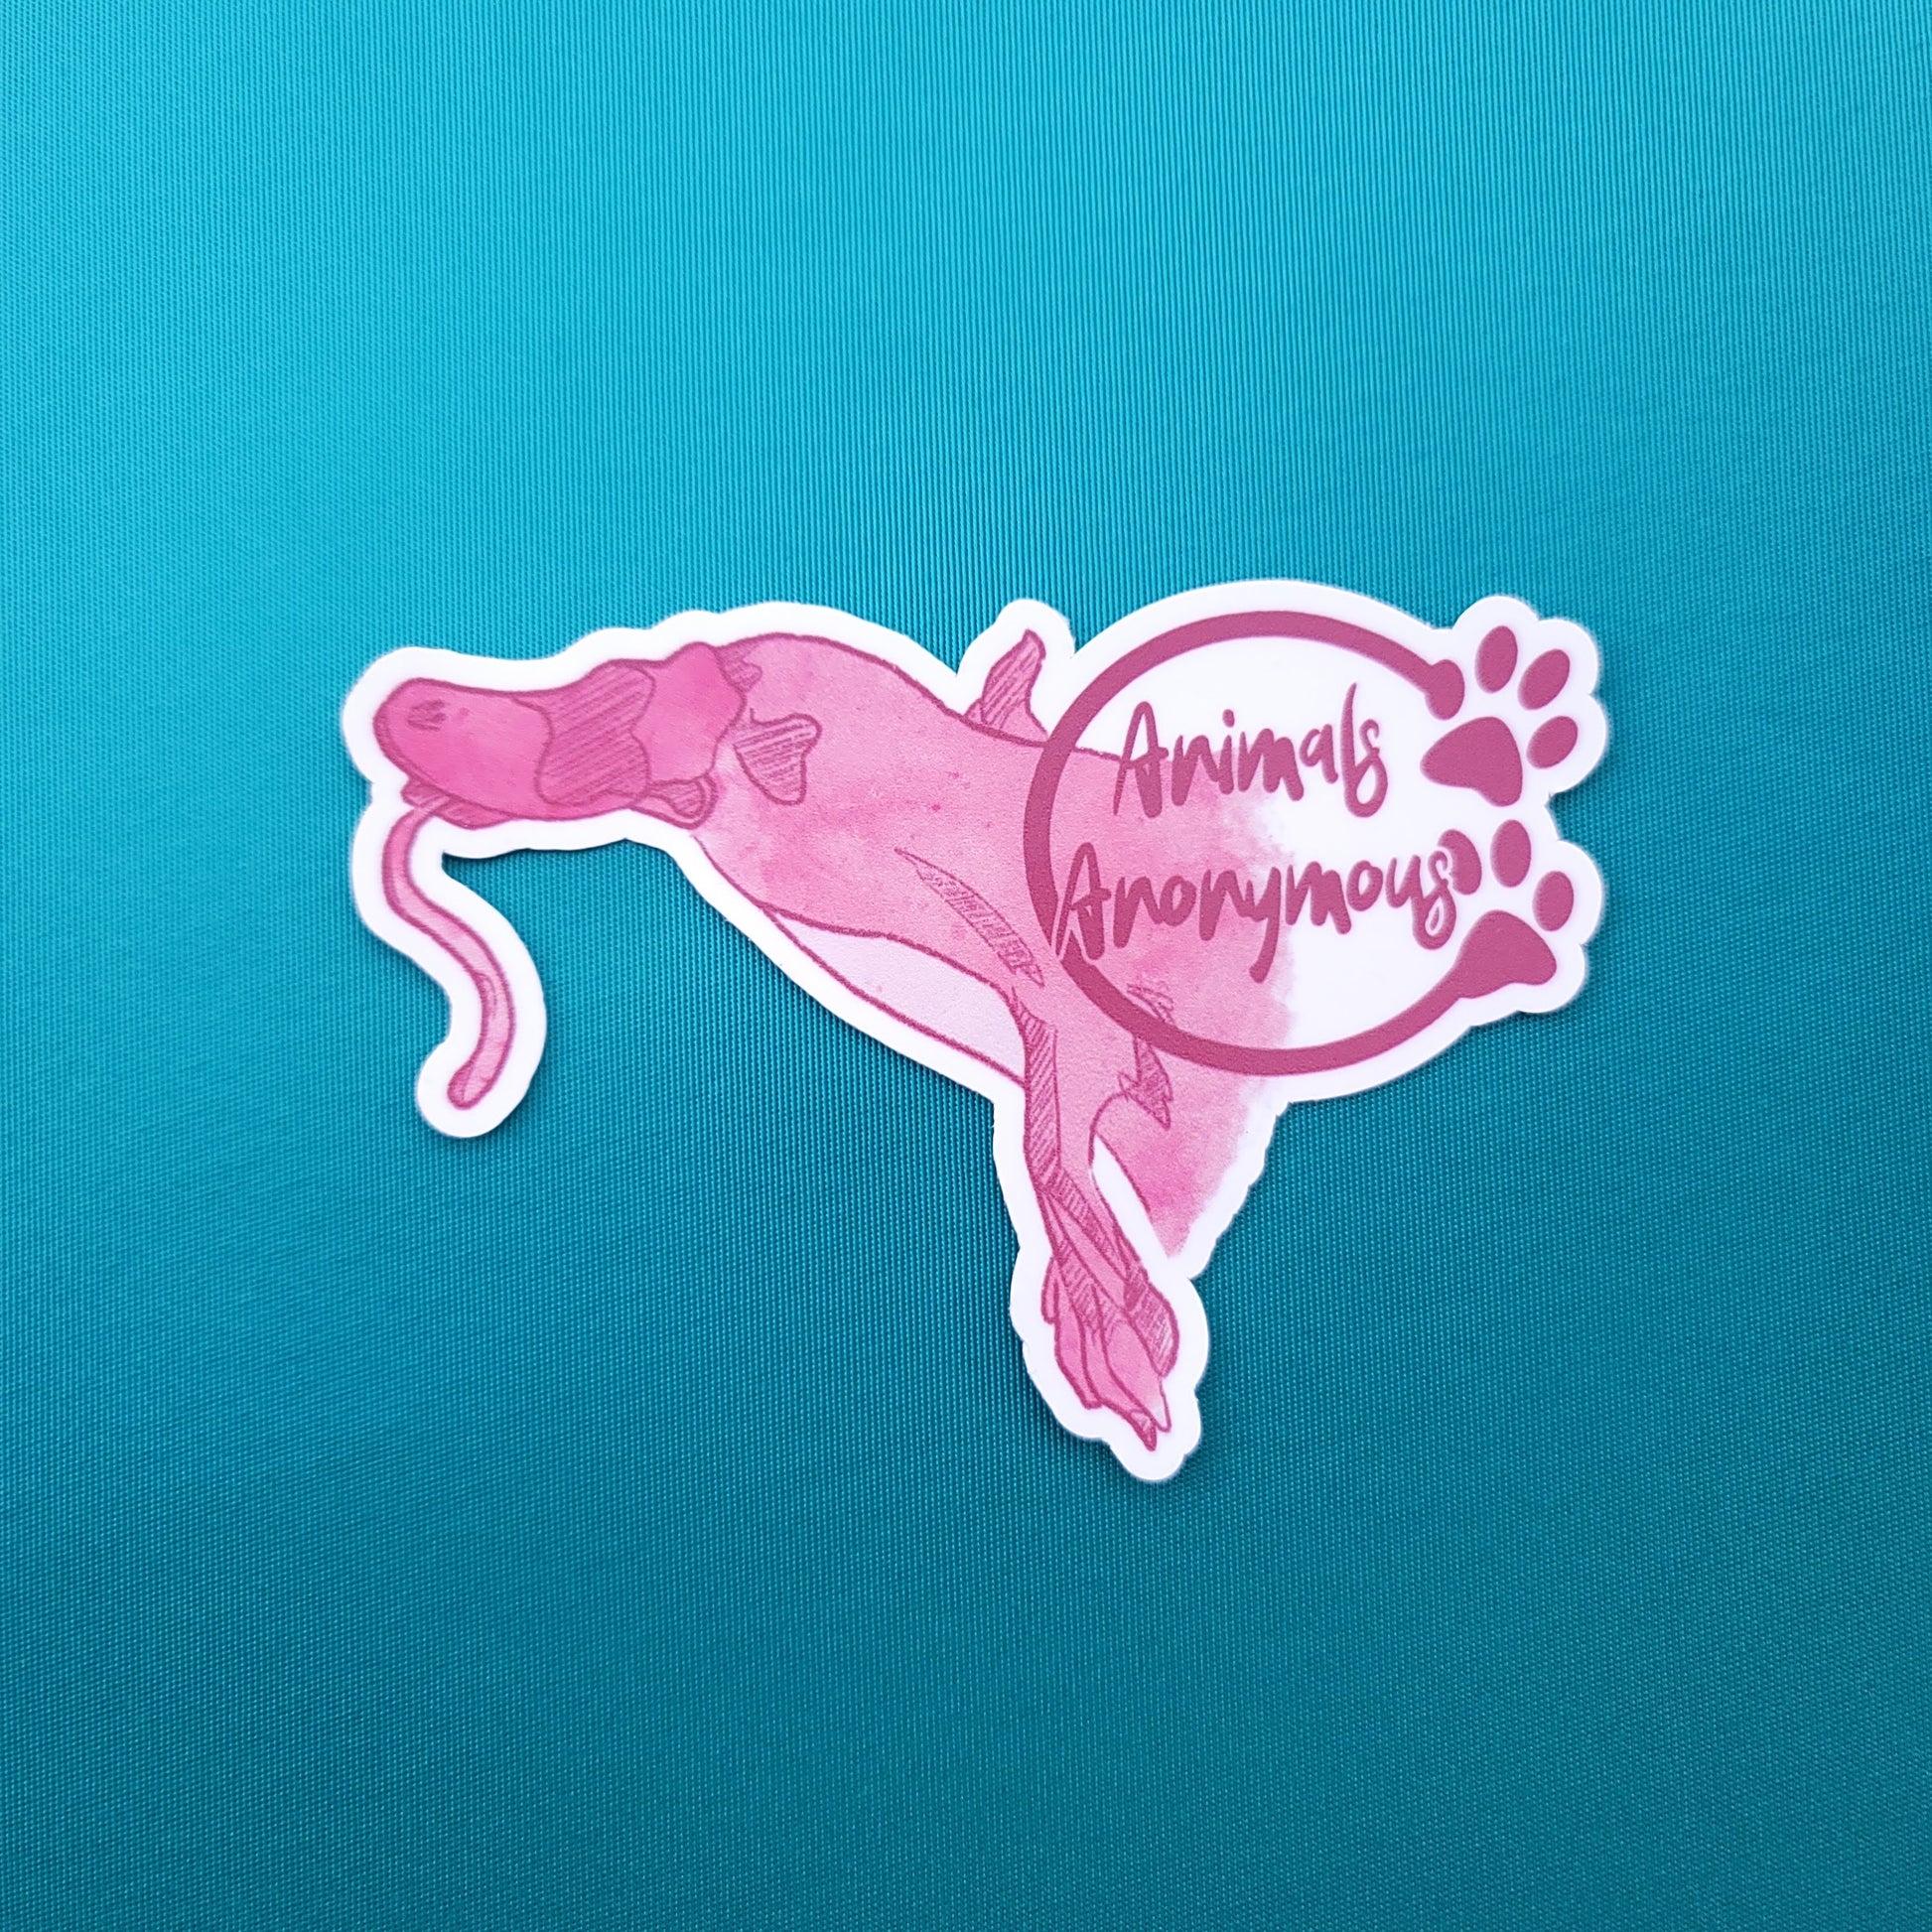 Platypus Sketch (Dark Pink) - Sticker - Animals Anonymous Apparel